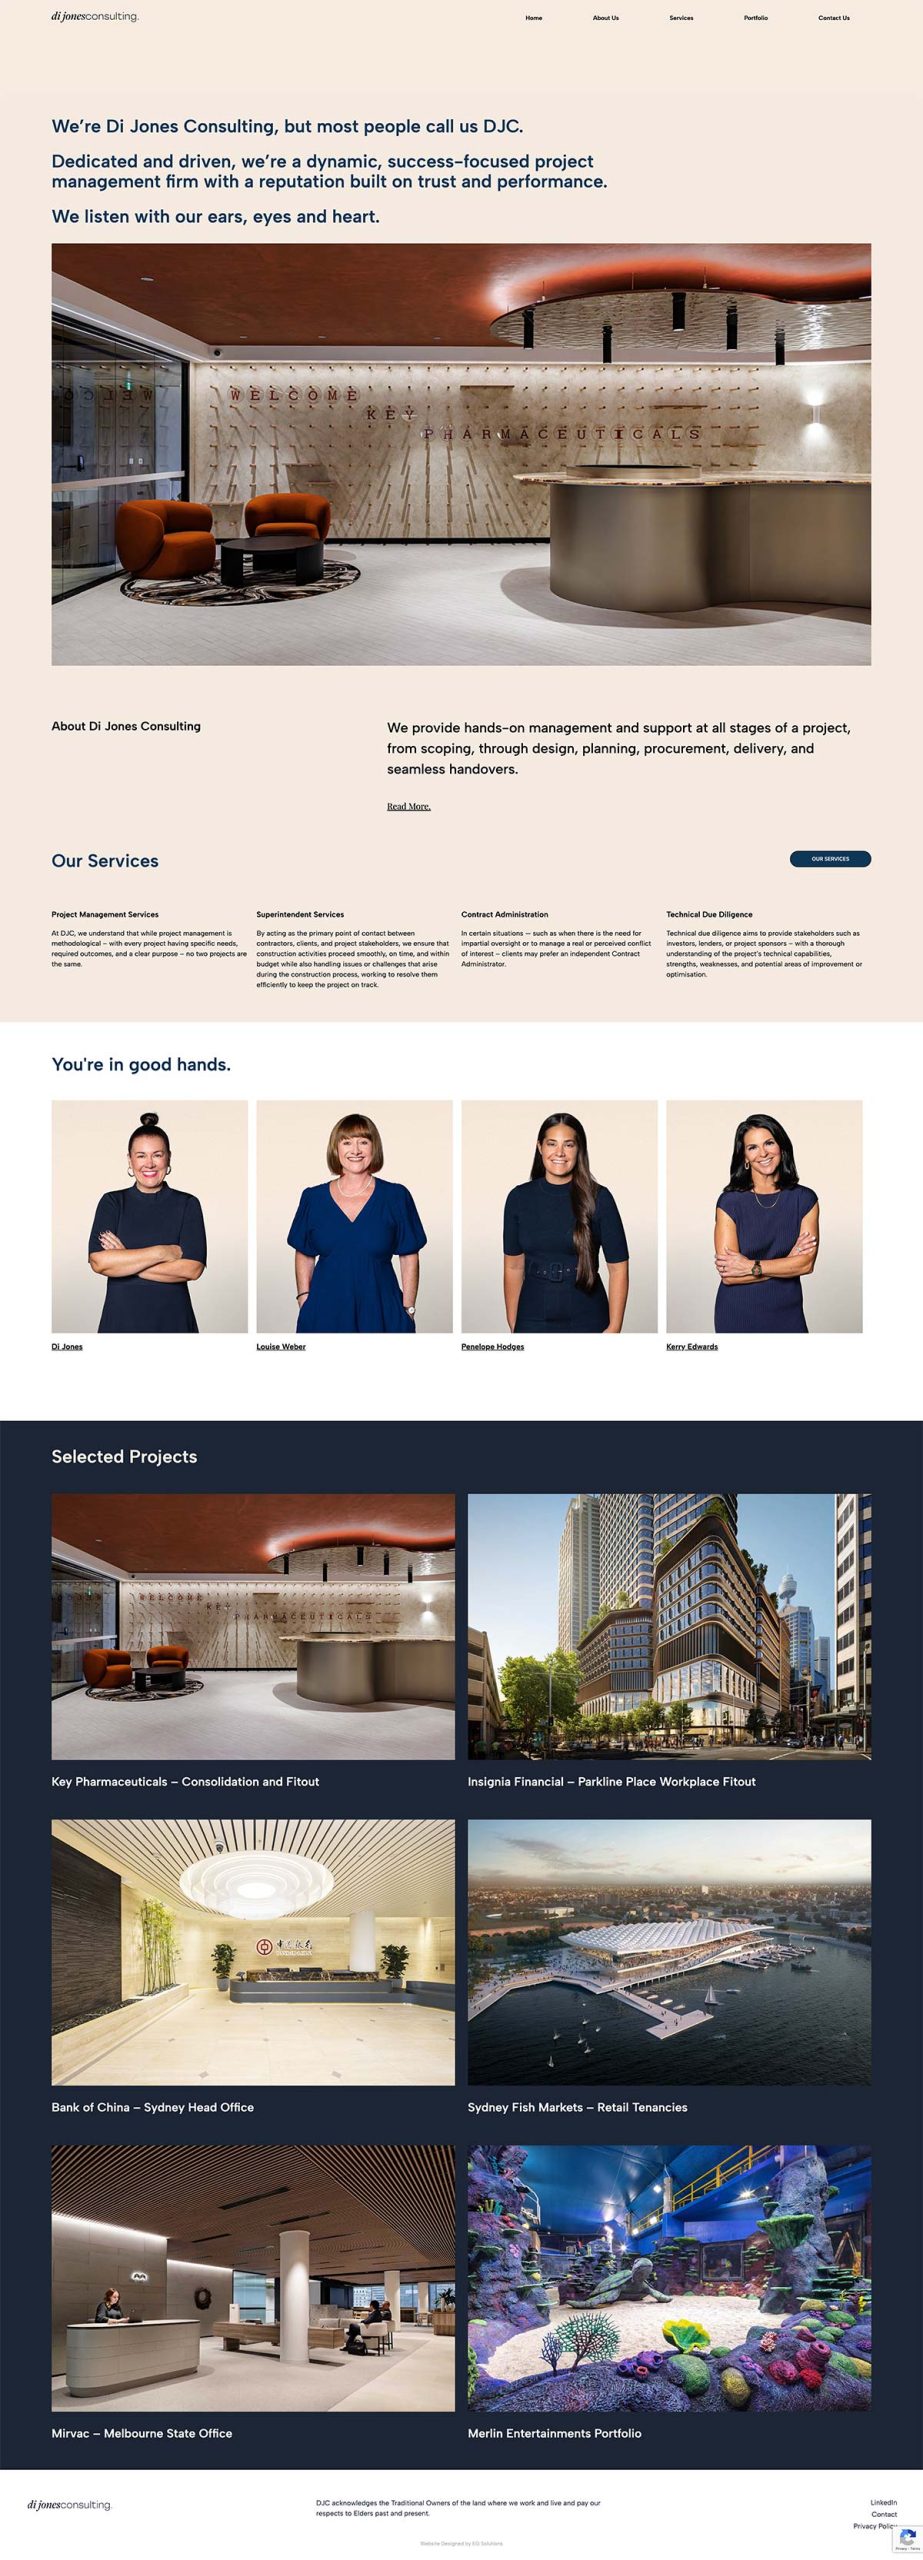 Di Jones Consulting Website Design - Home Page